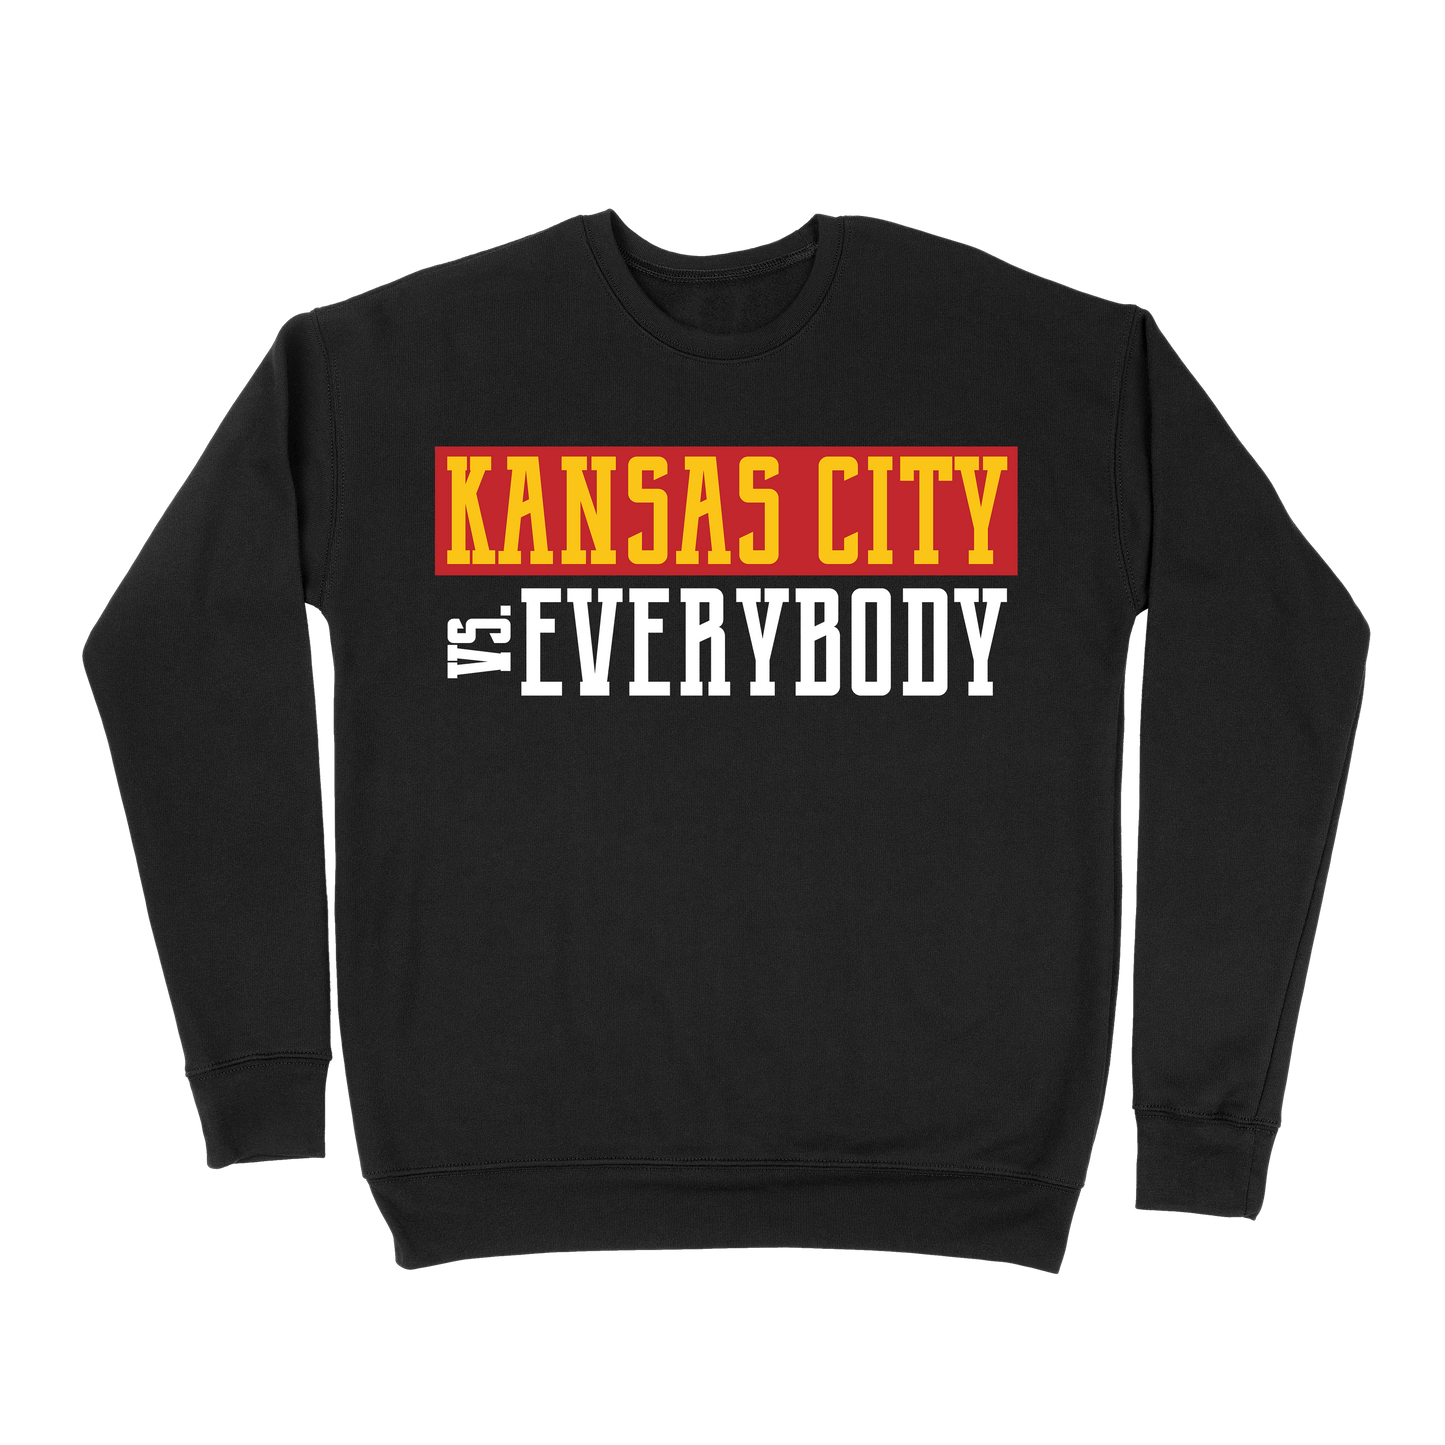 Kansas City vs. Everybody Sweatshirt - Black